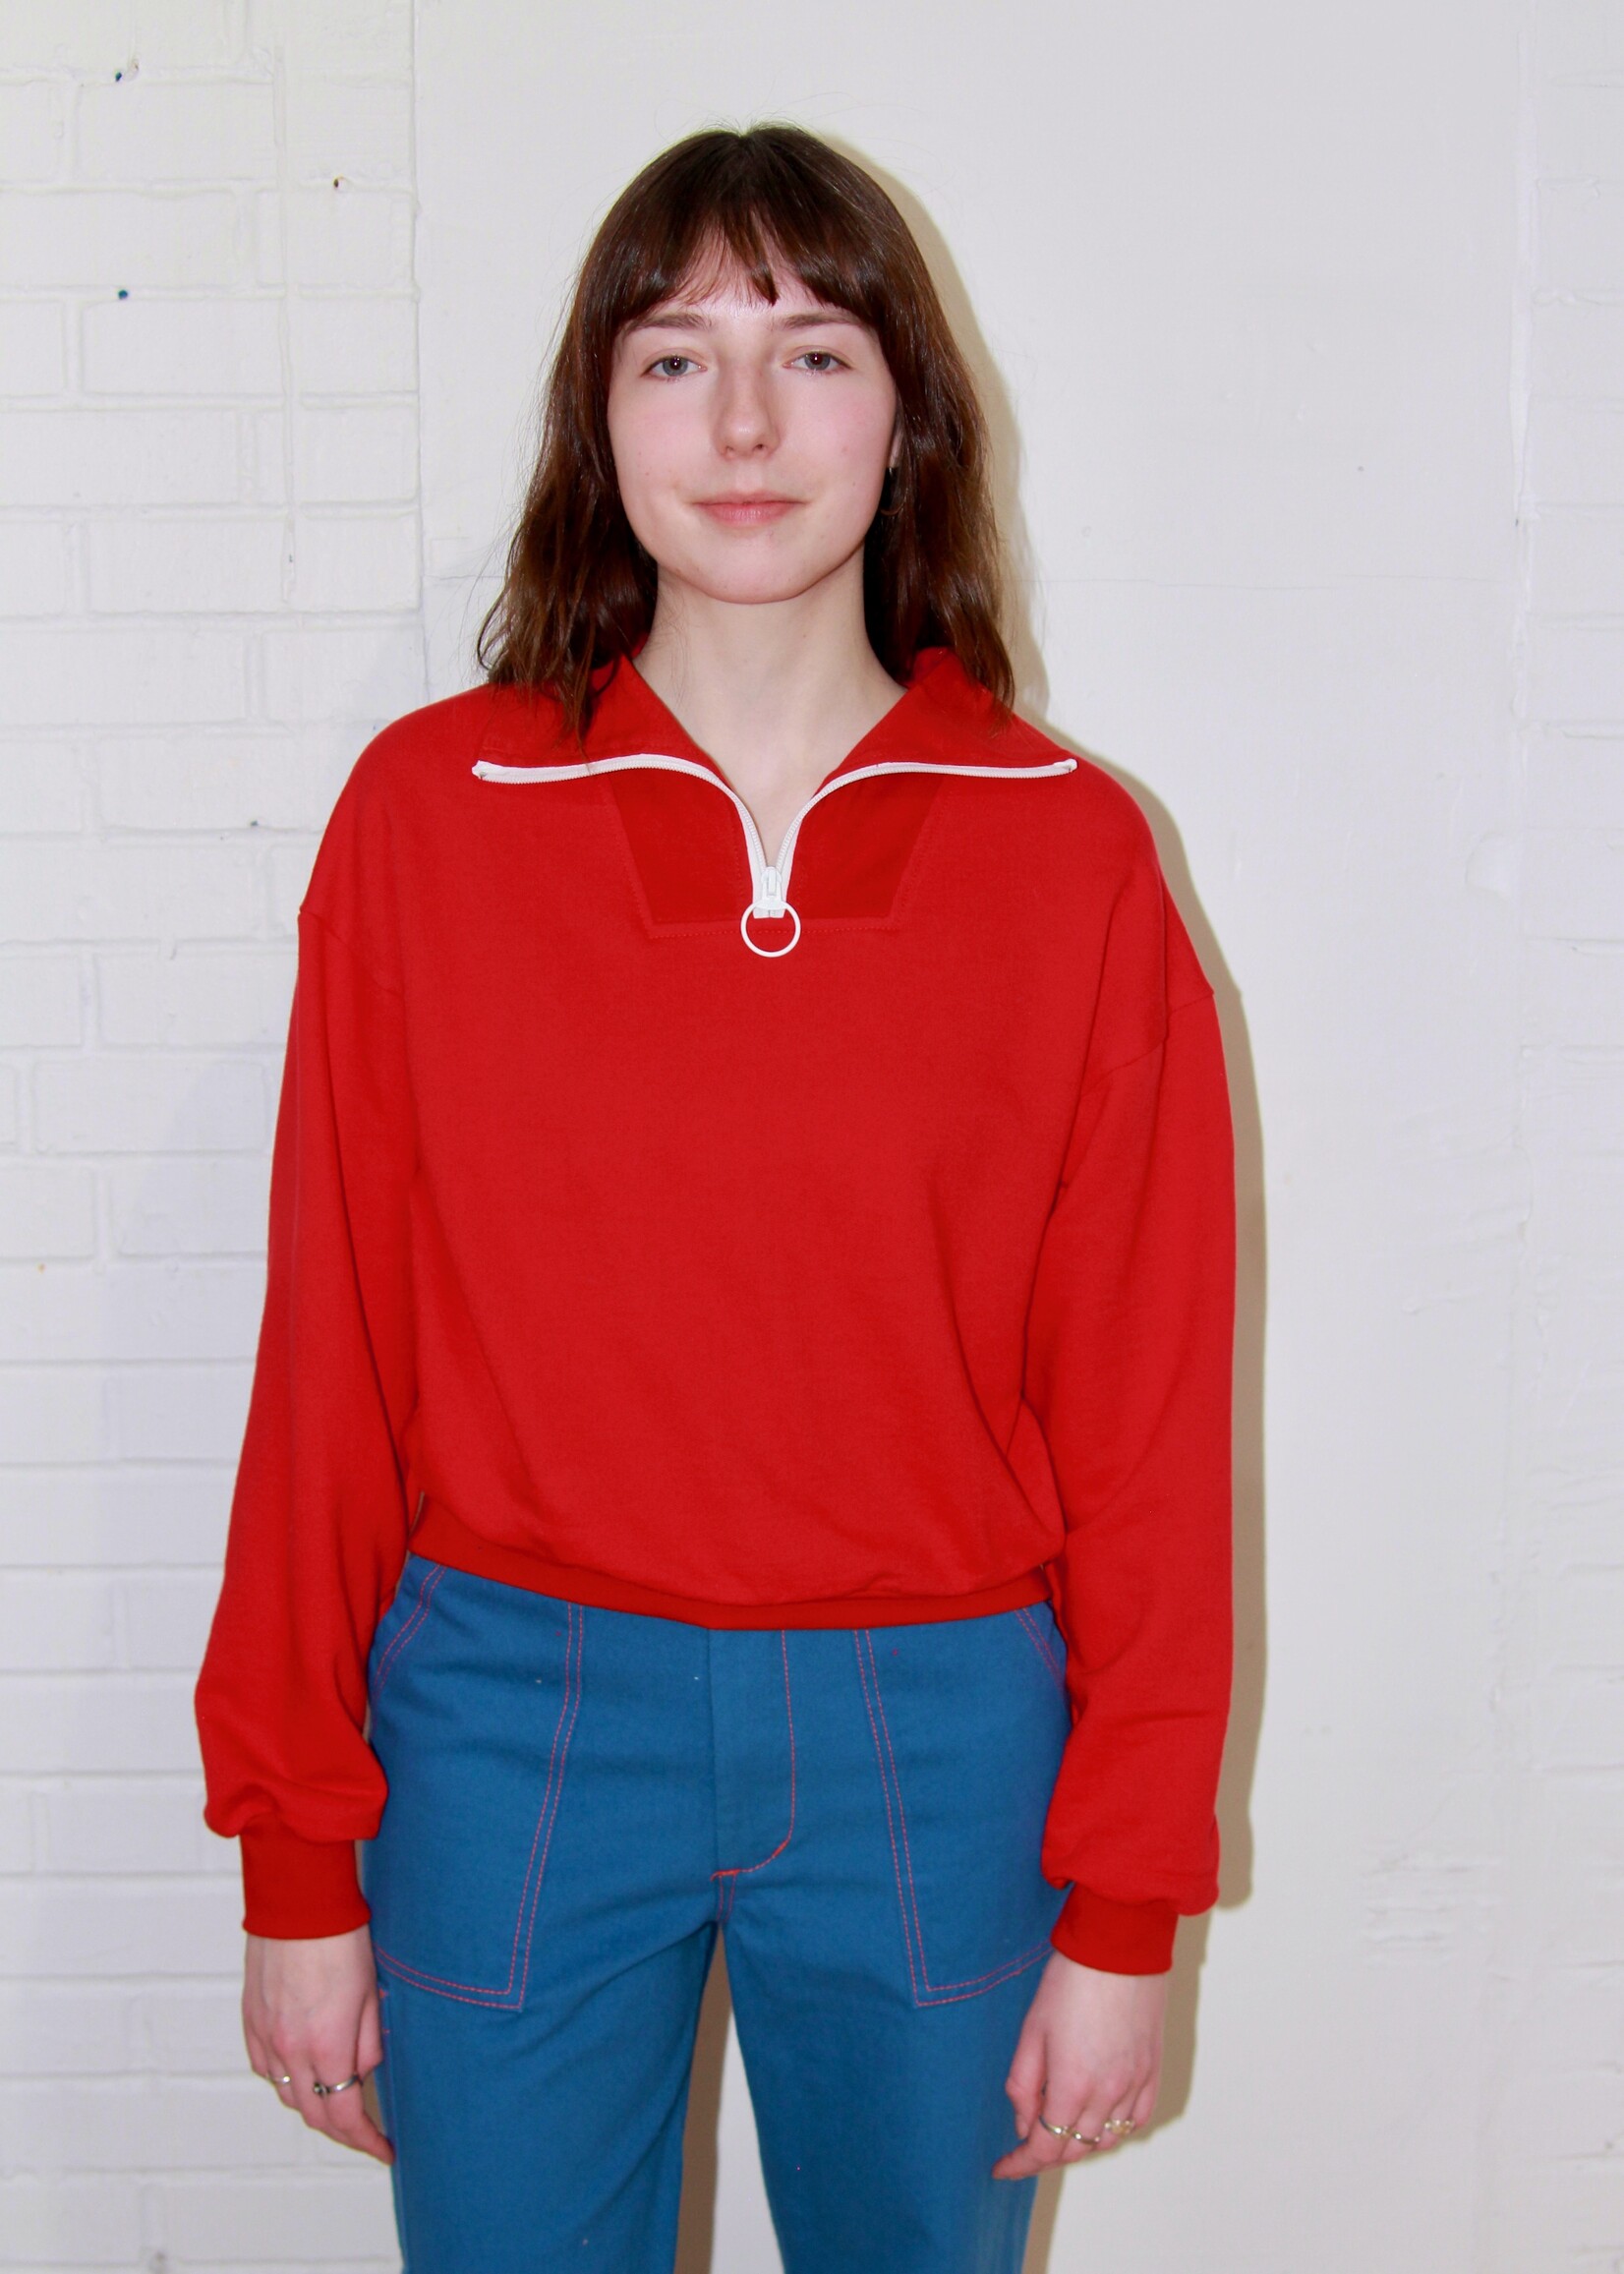 Studio Citizen Half Zip Sweater in Red with White Zipper